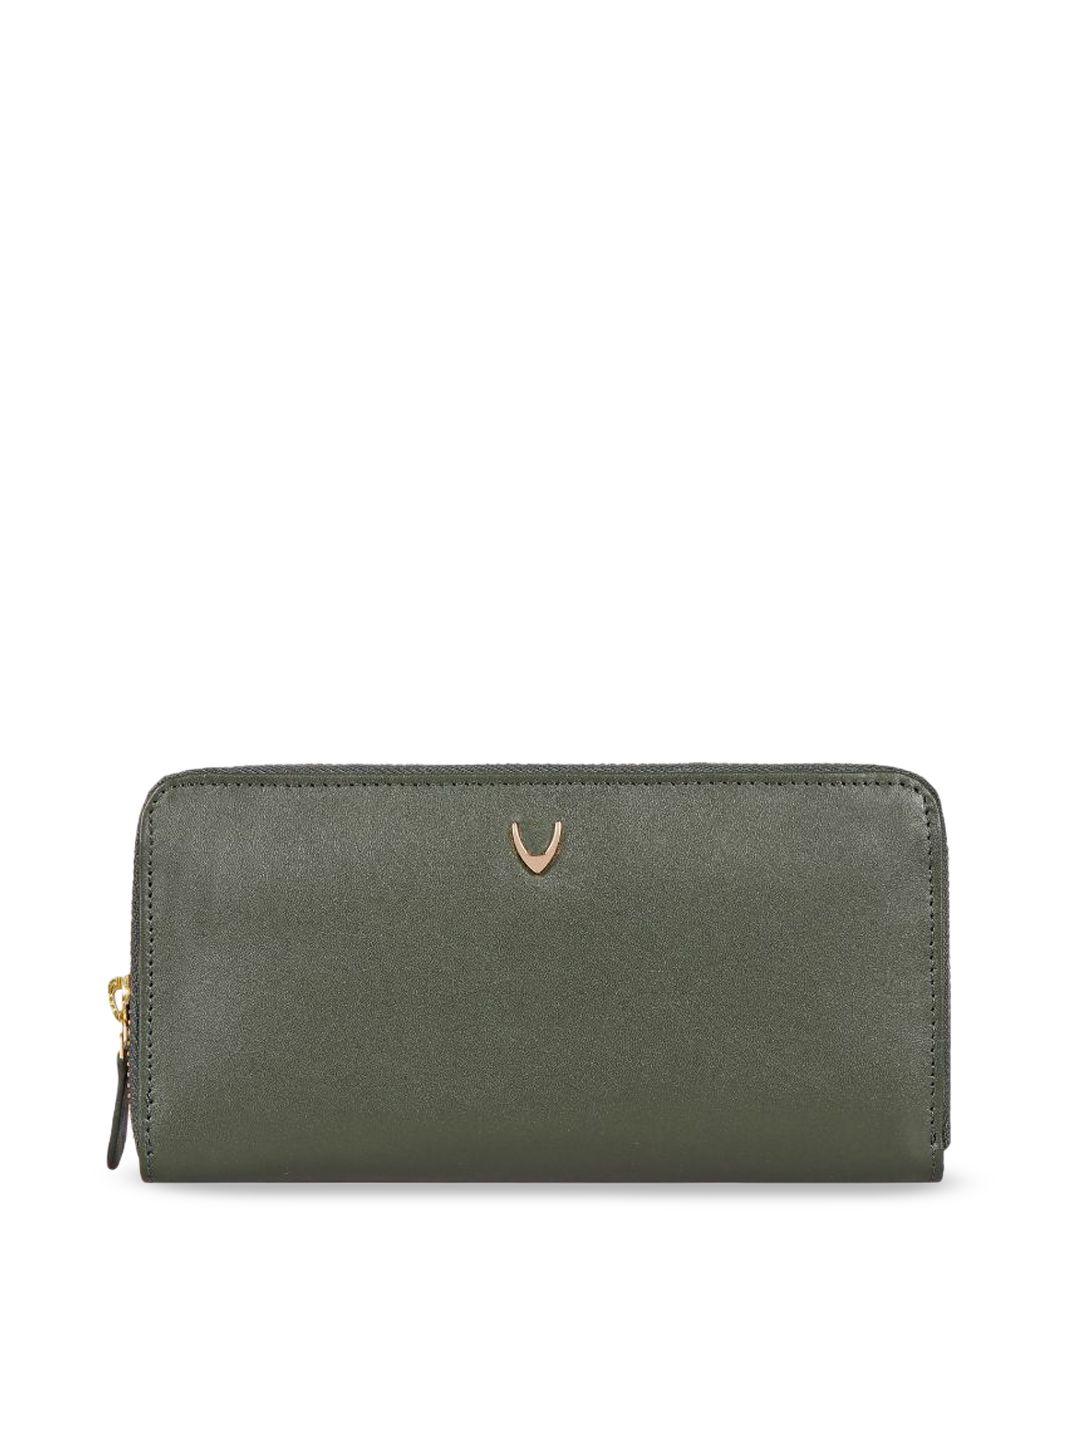 hidesign women olive green leather zip around wallet